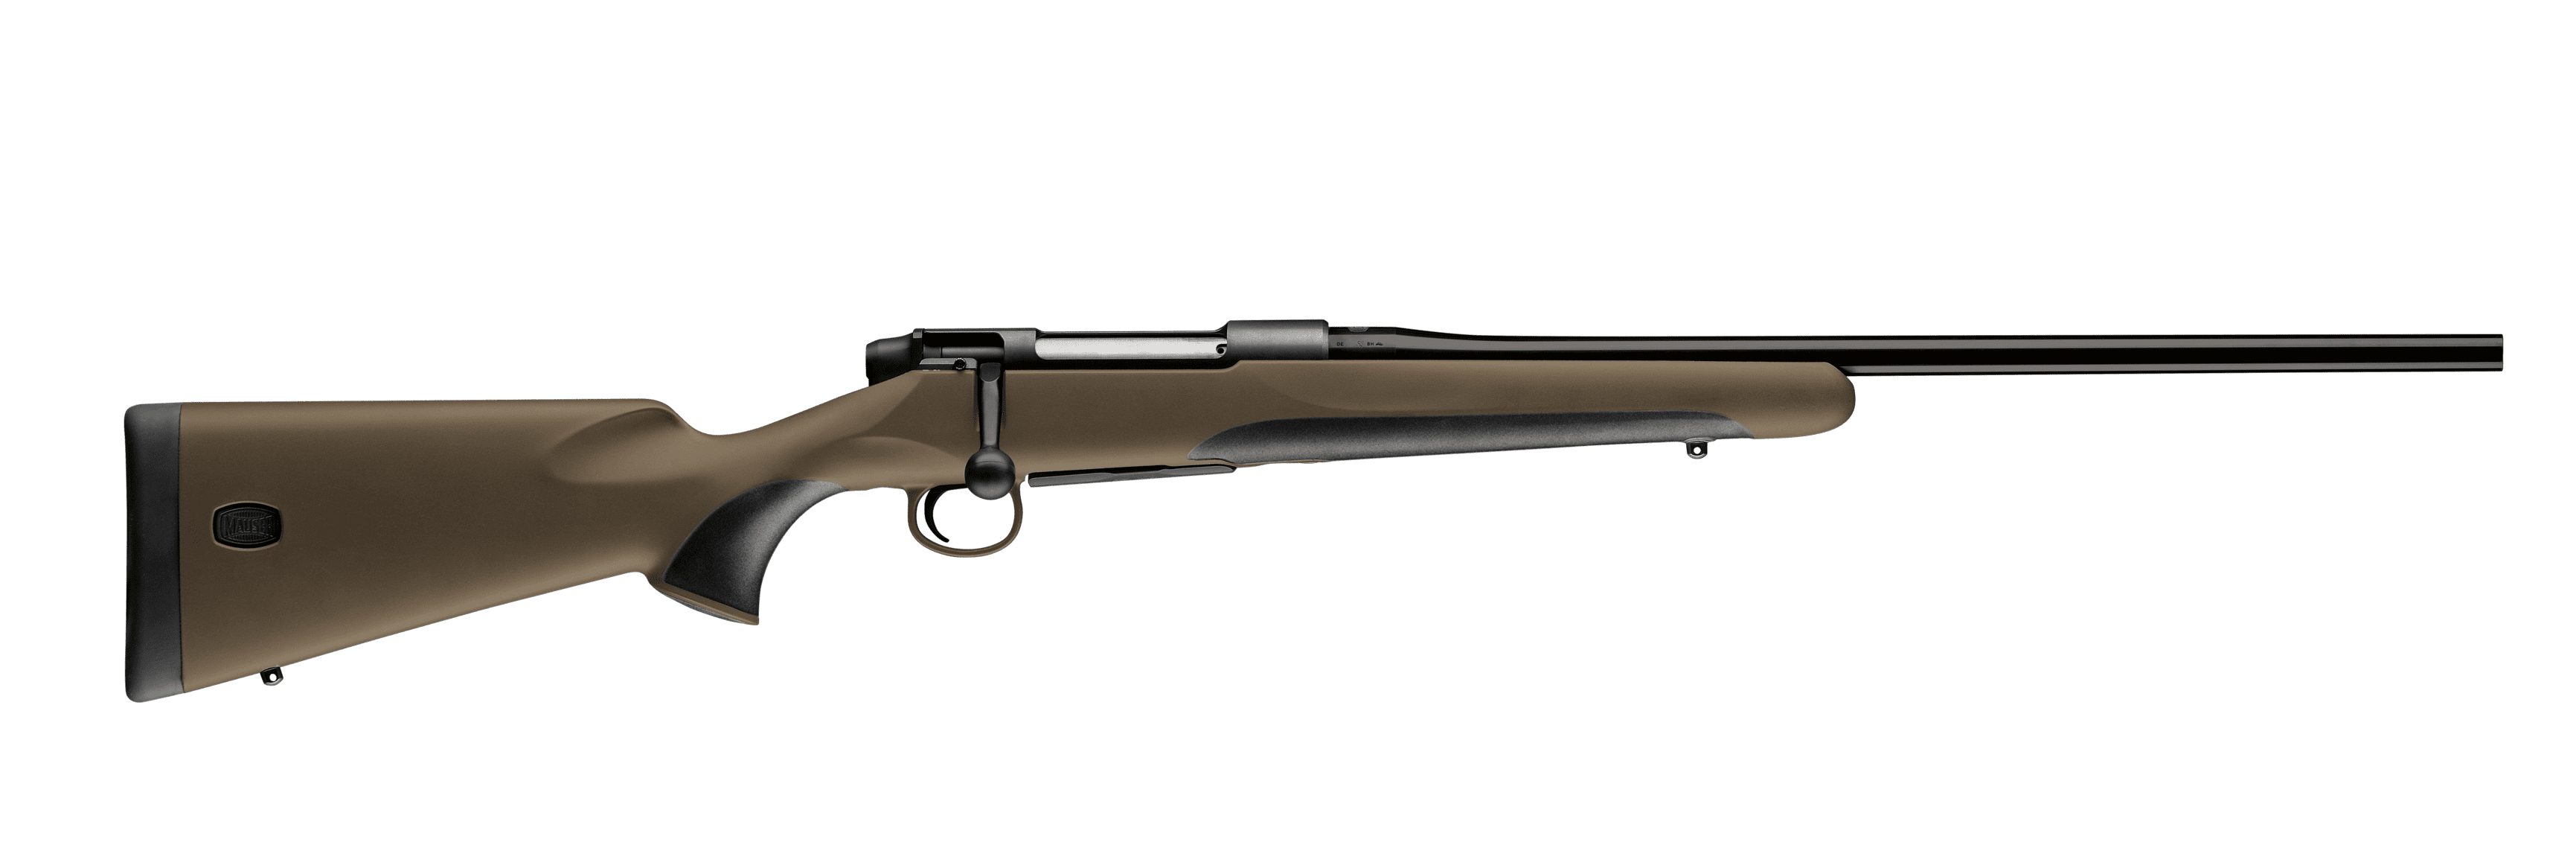 Rifle de Cerrojo 18 Standard